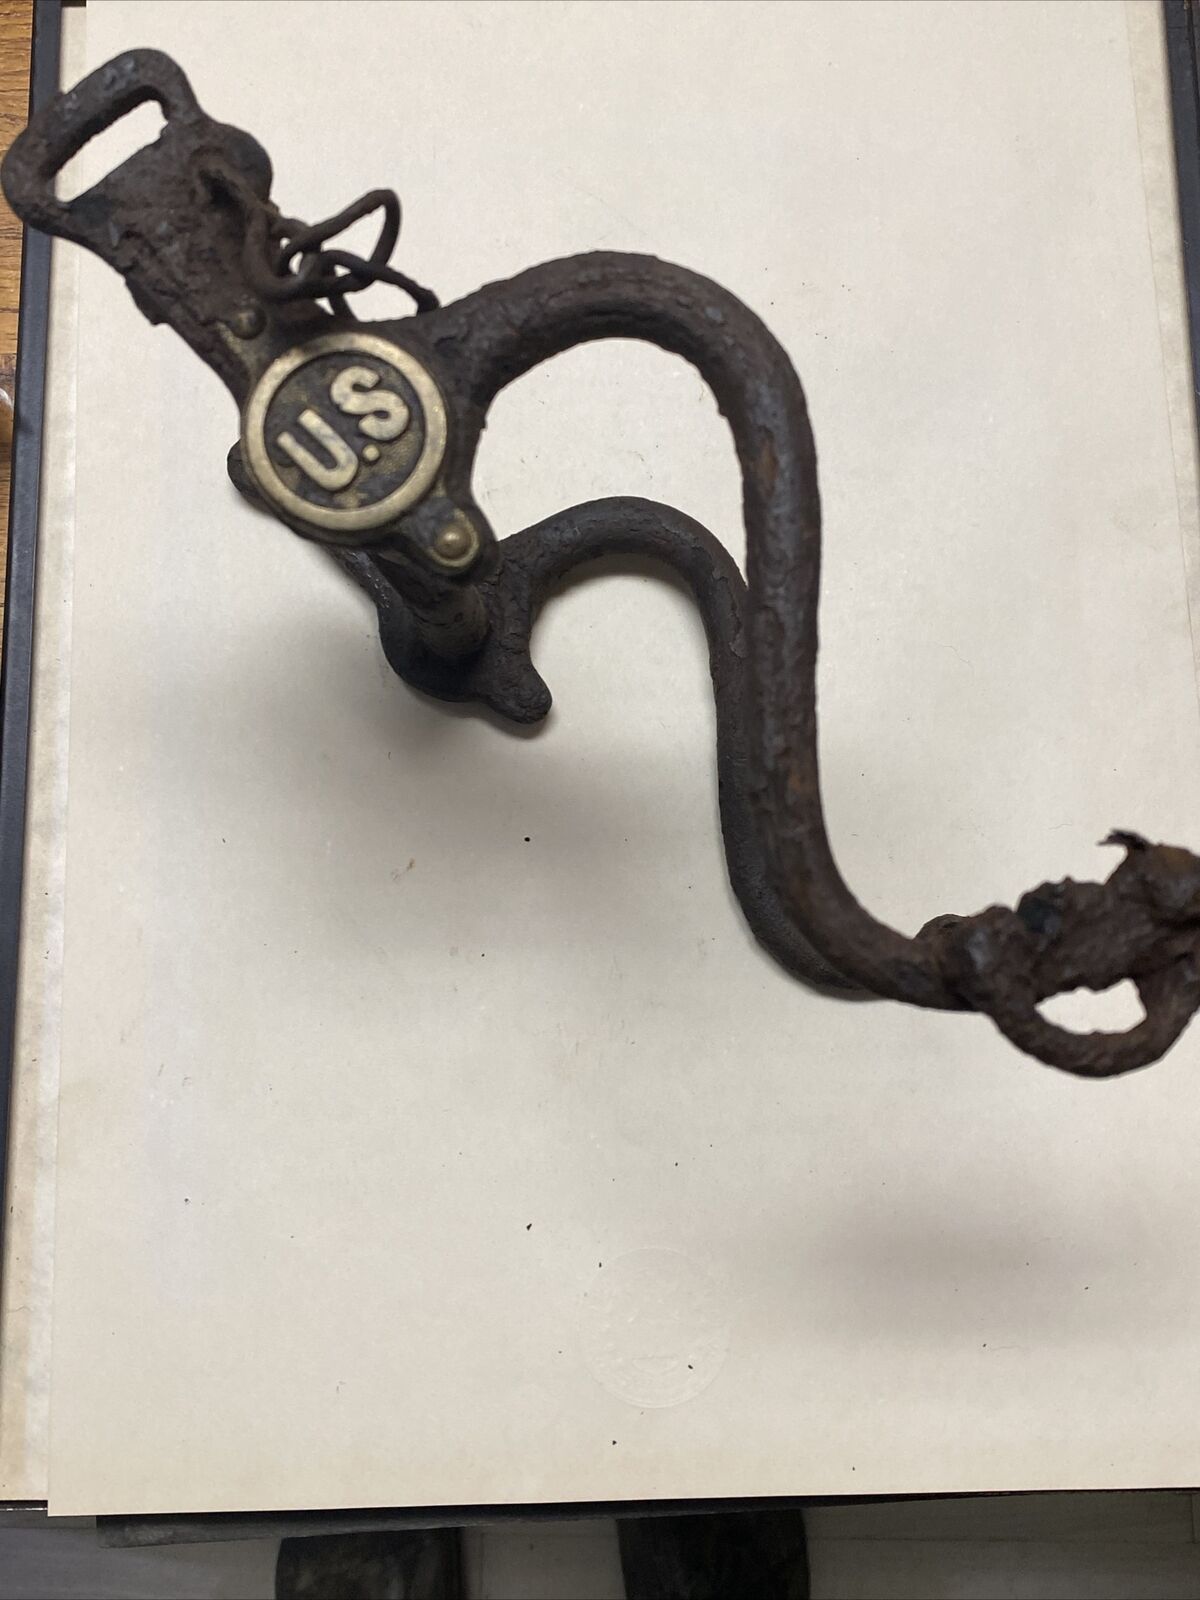 Antique Model 1859 U.S. Civil War Cavalry Military Horse Bridle Ring Bit US Boss